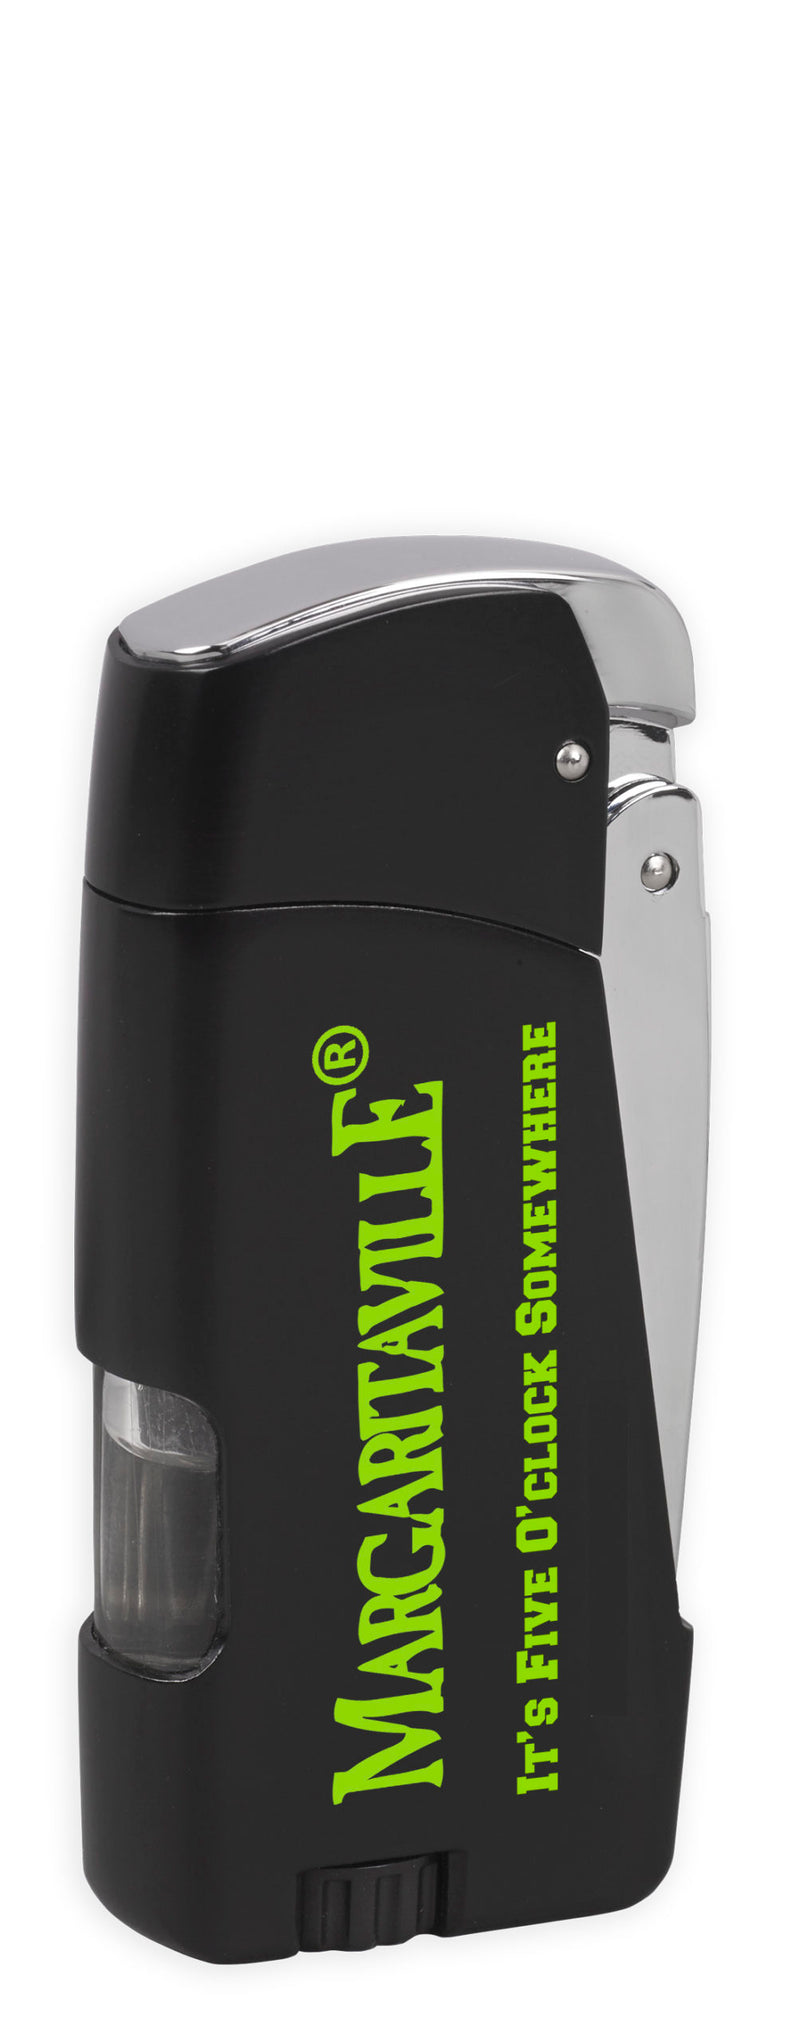 Margaritaville Swashbuckler Lighter - NOW $17.50 WITH DISCOUNT!